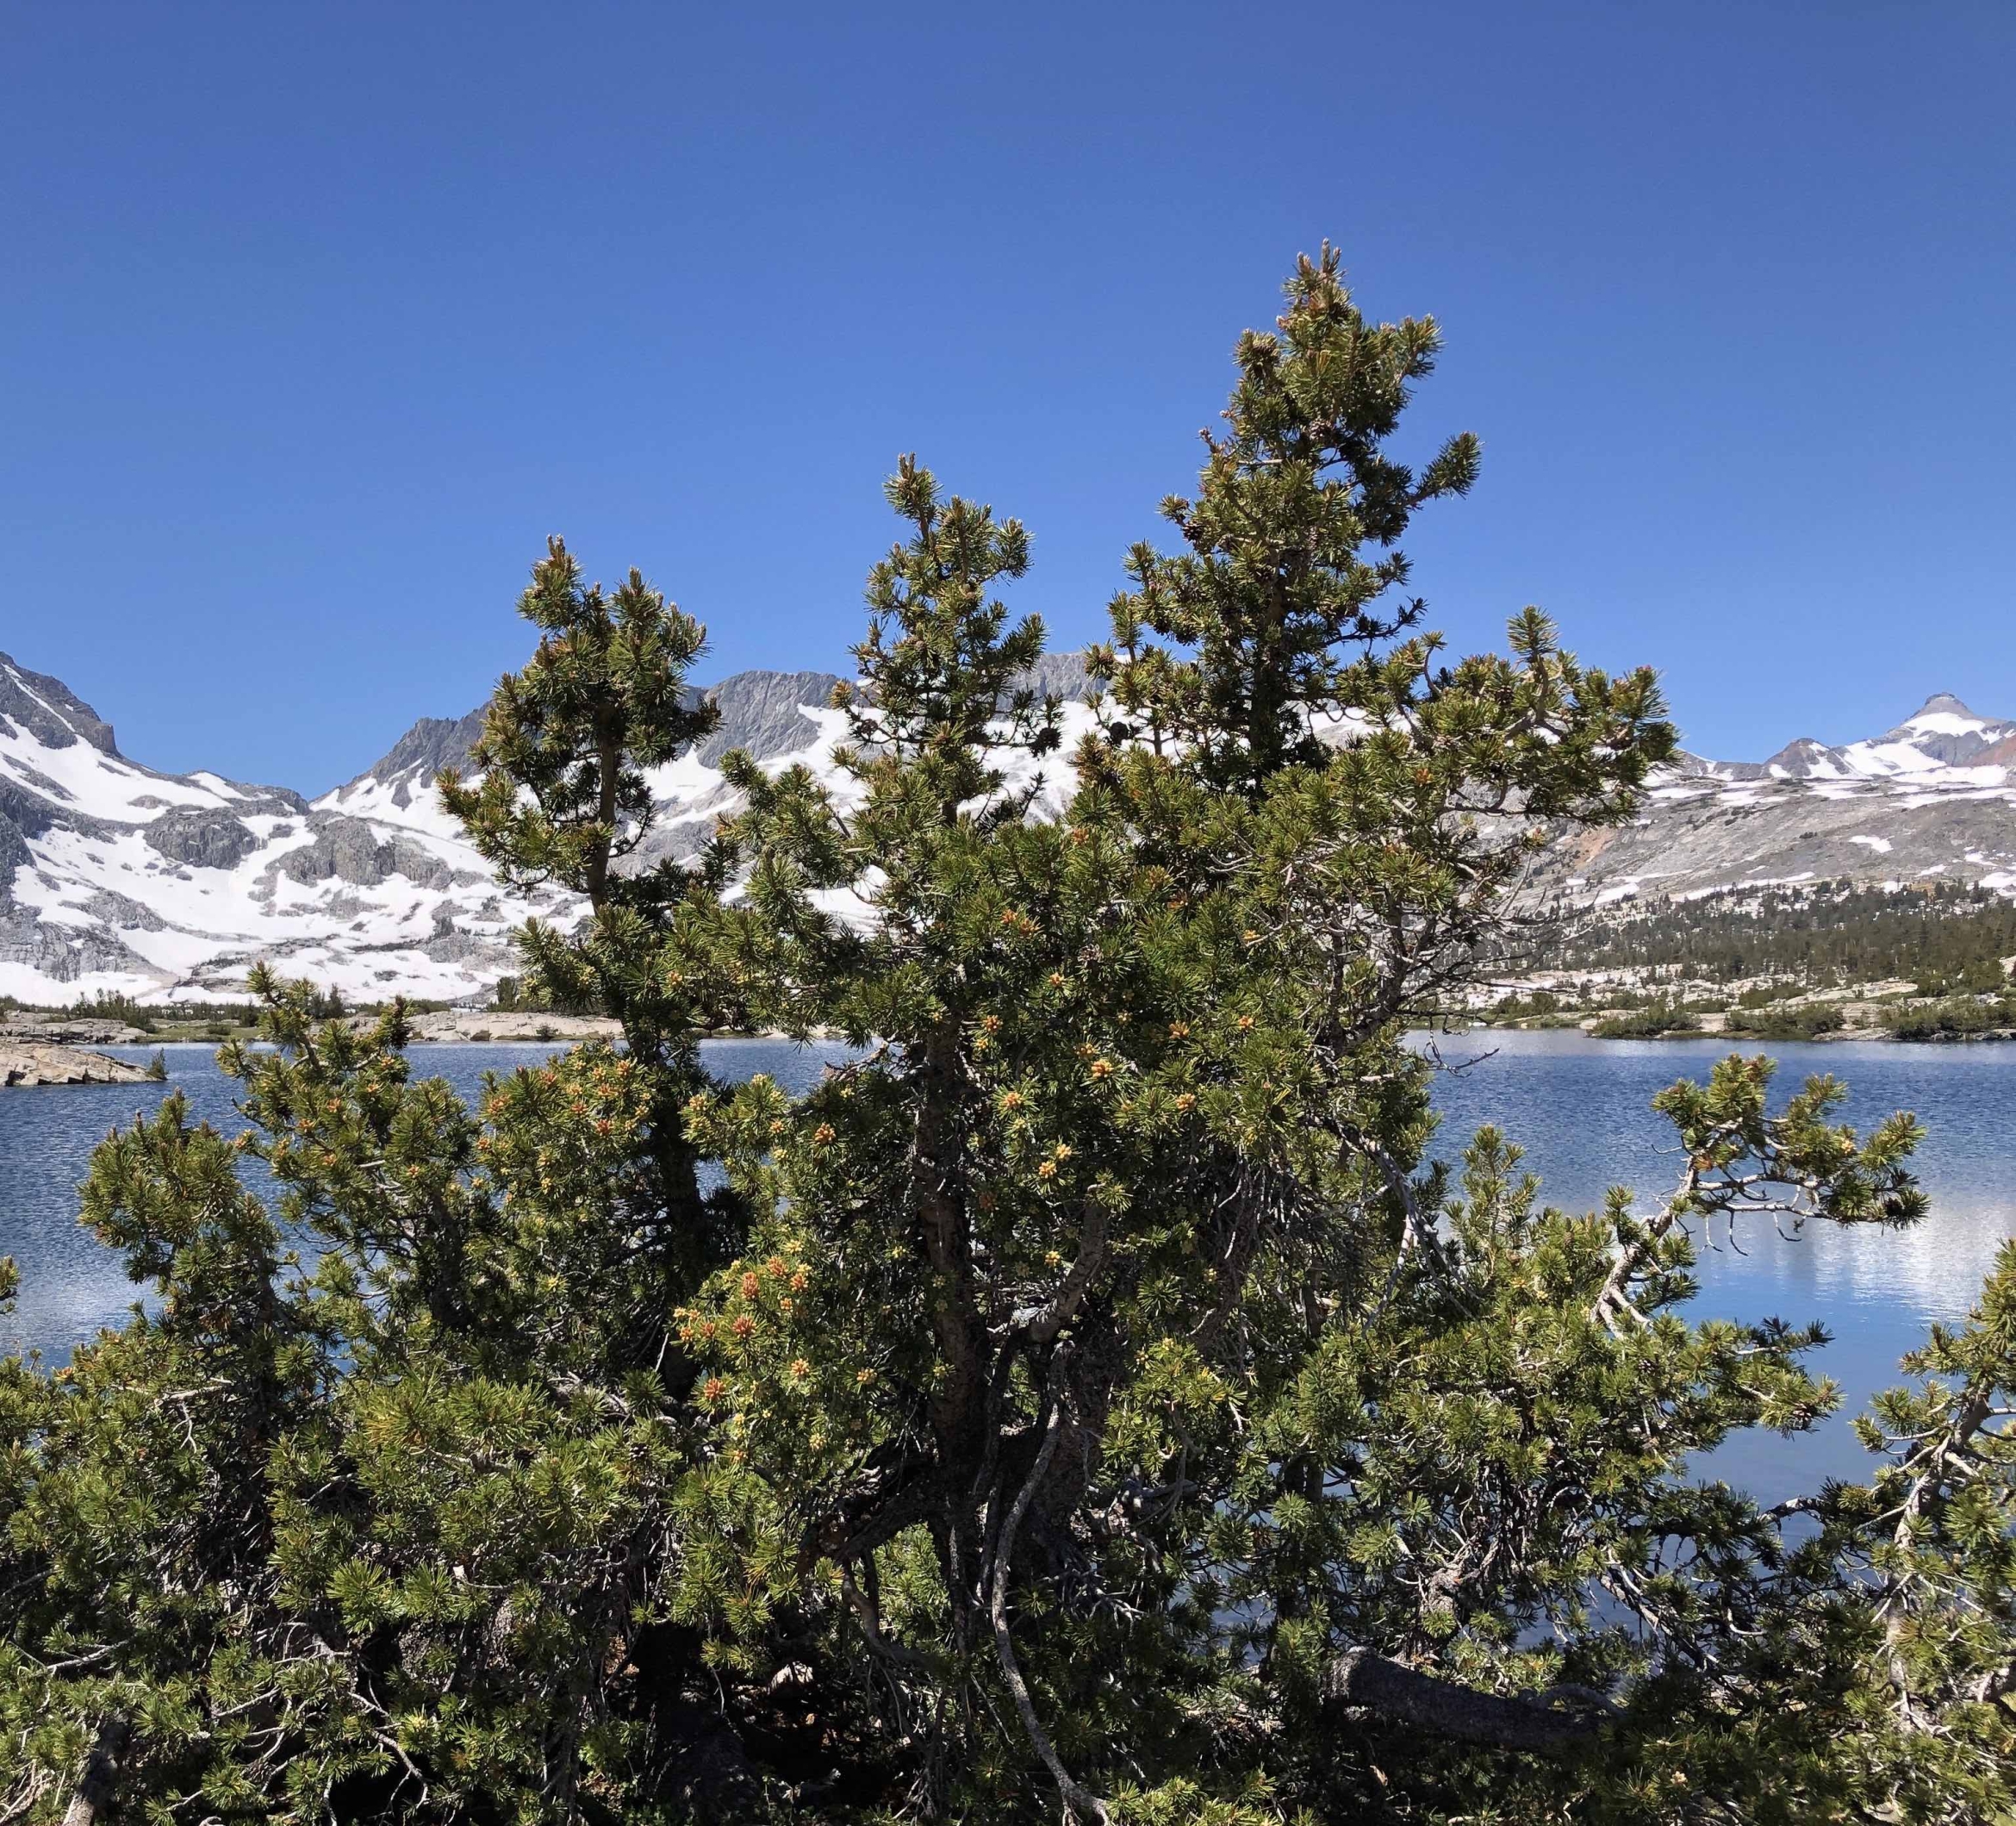 A whitebark pine grows near a lake in the Sierra Nevada.